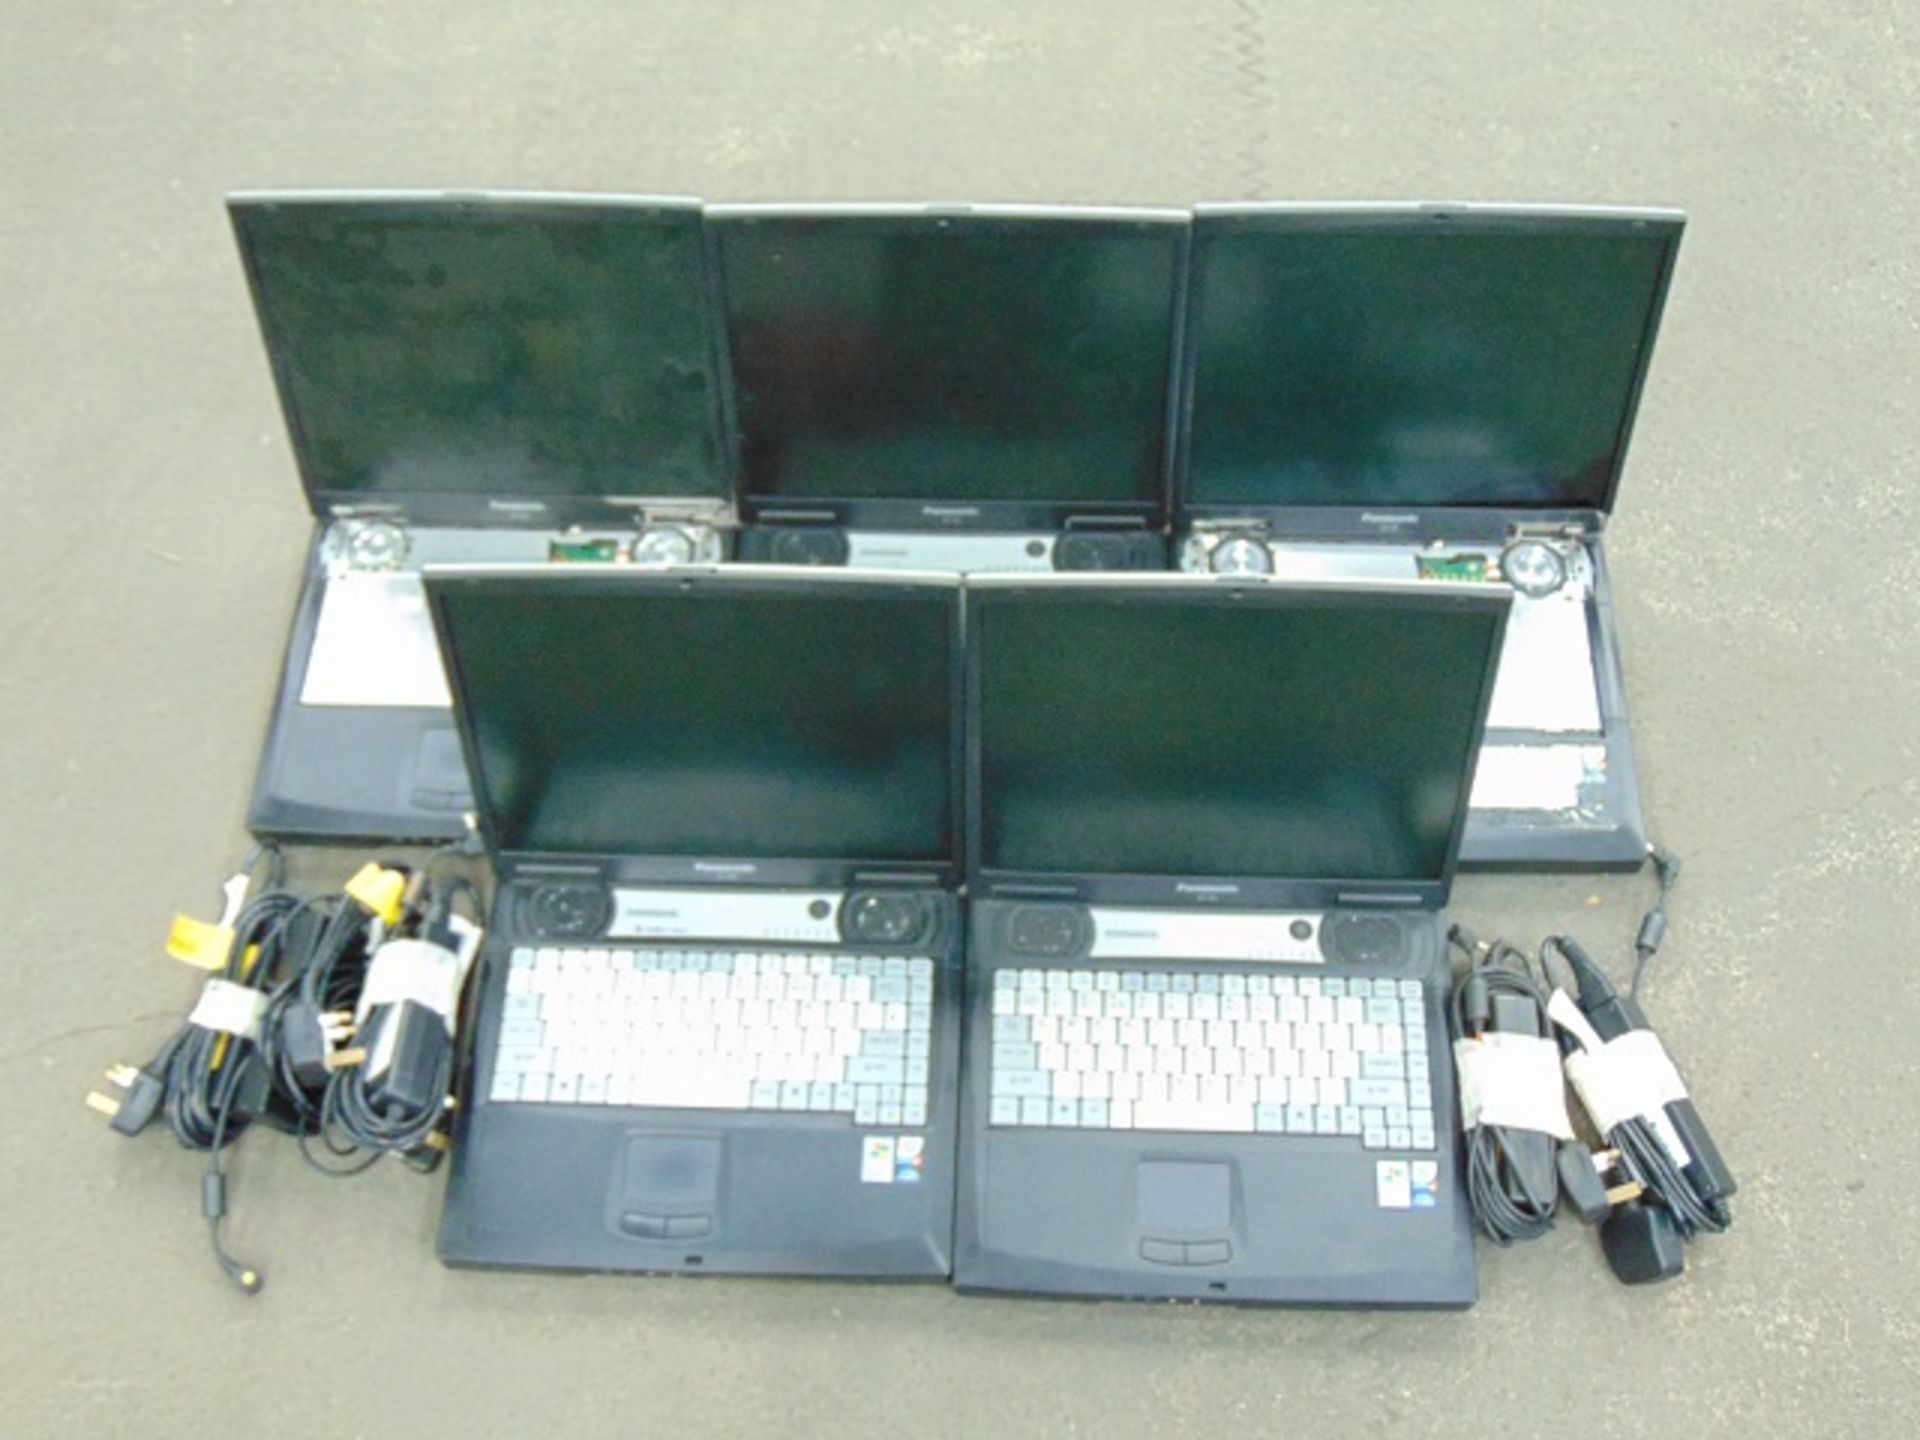 5 x Panasonic CF-50 Toughbook Laptops